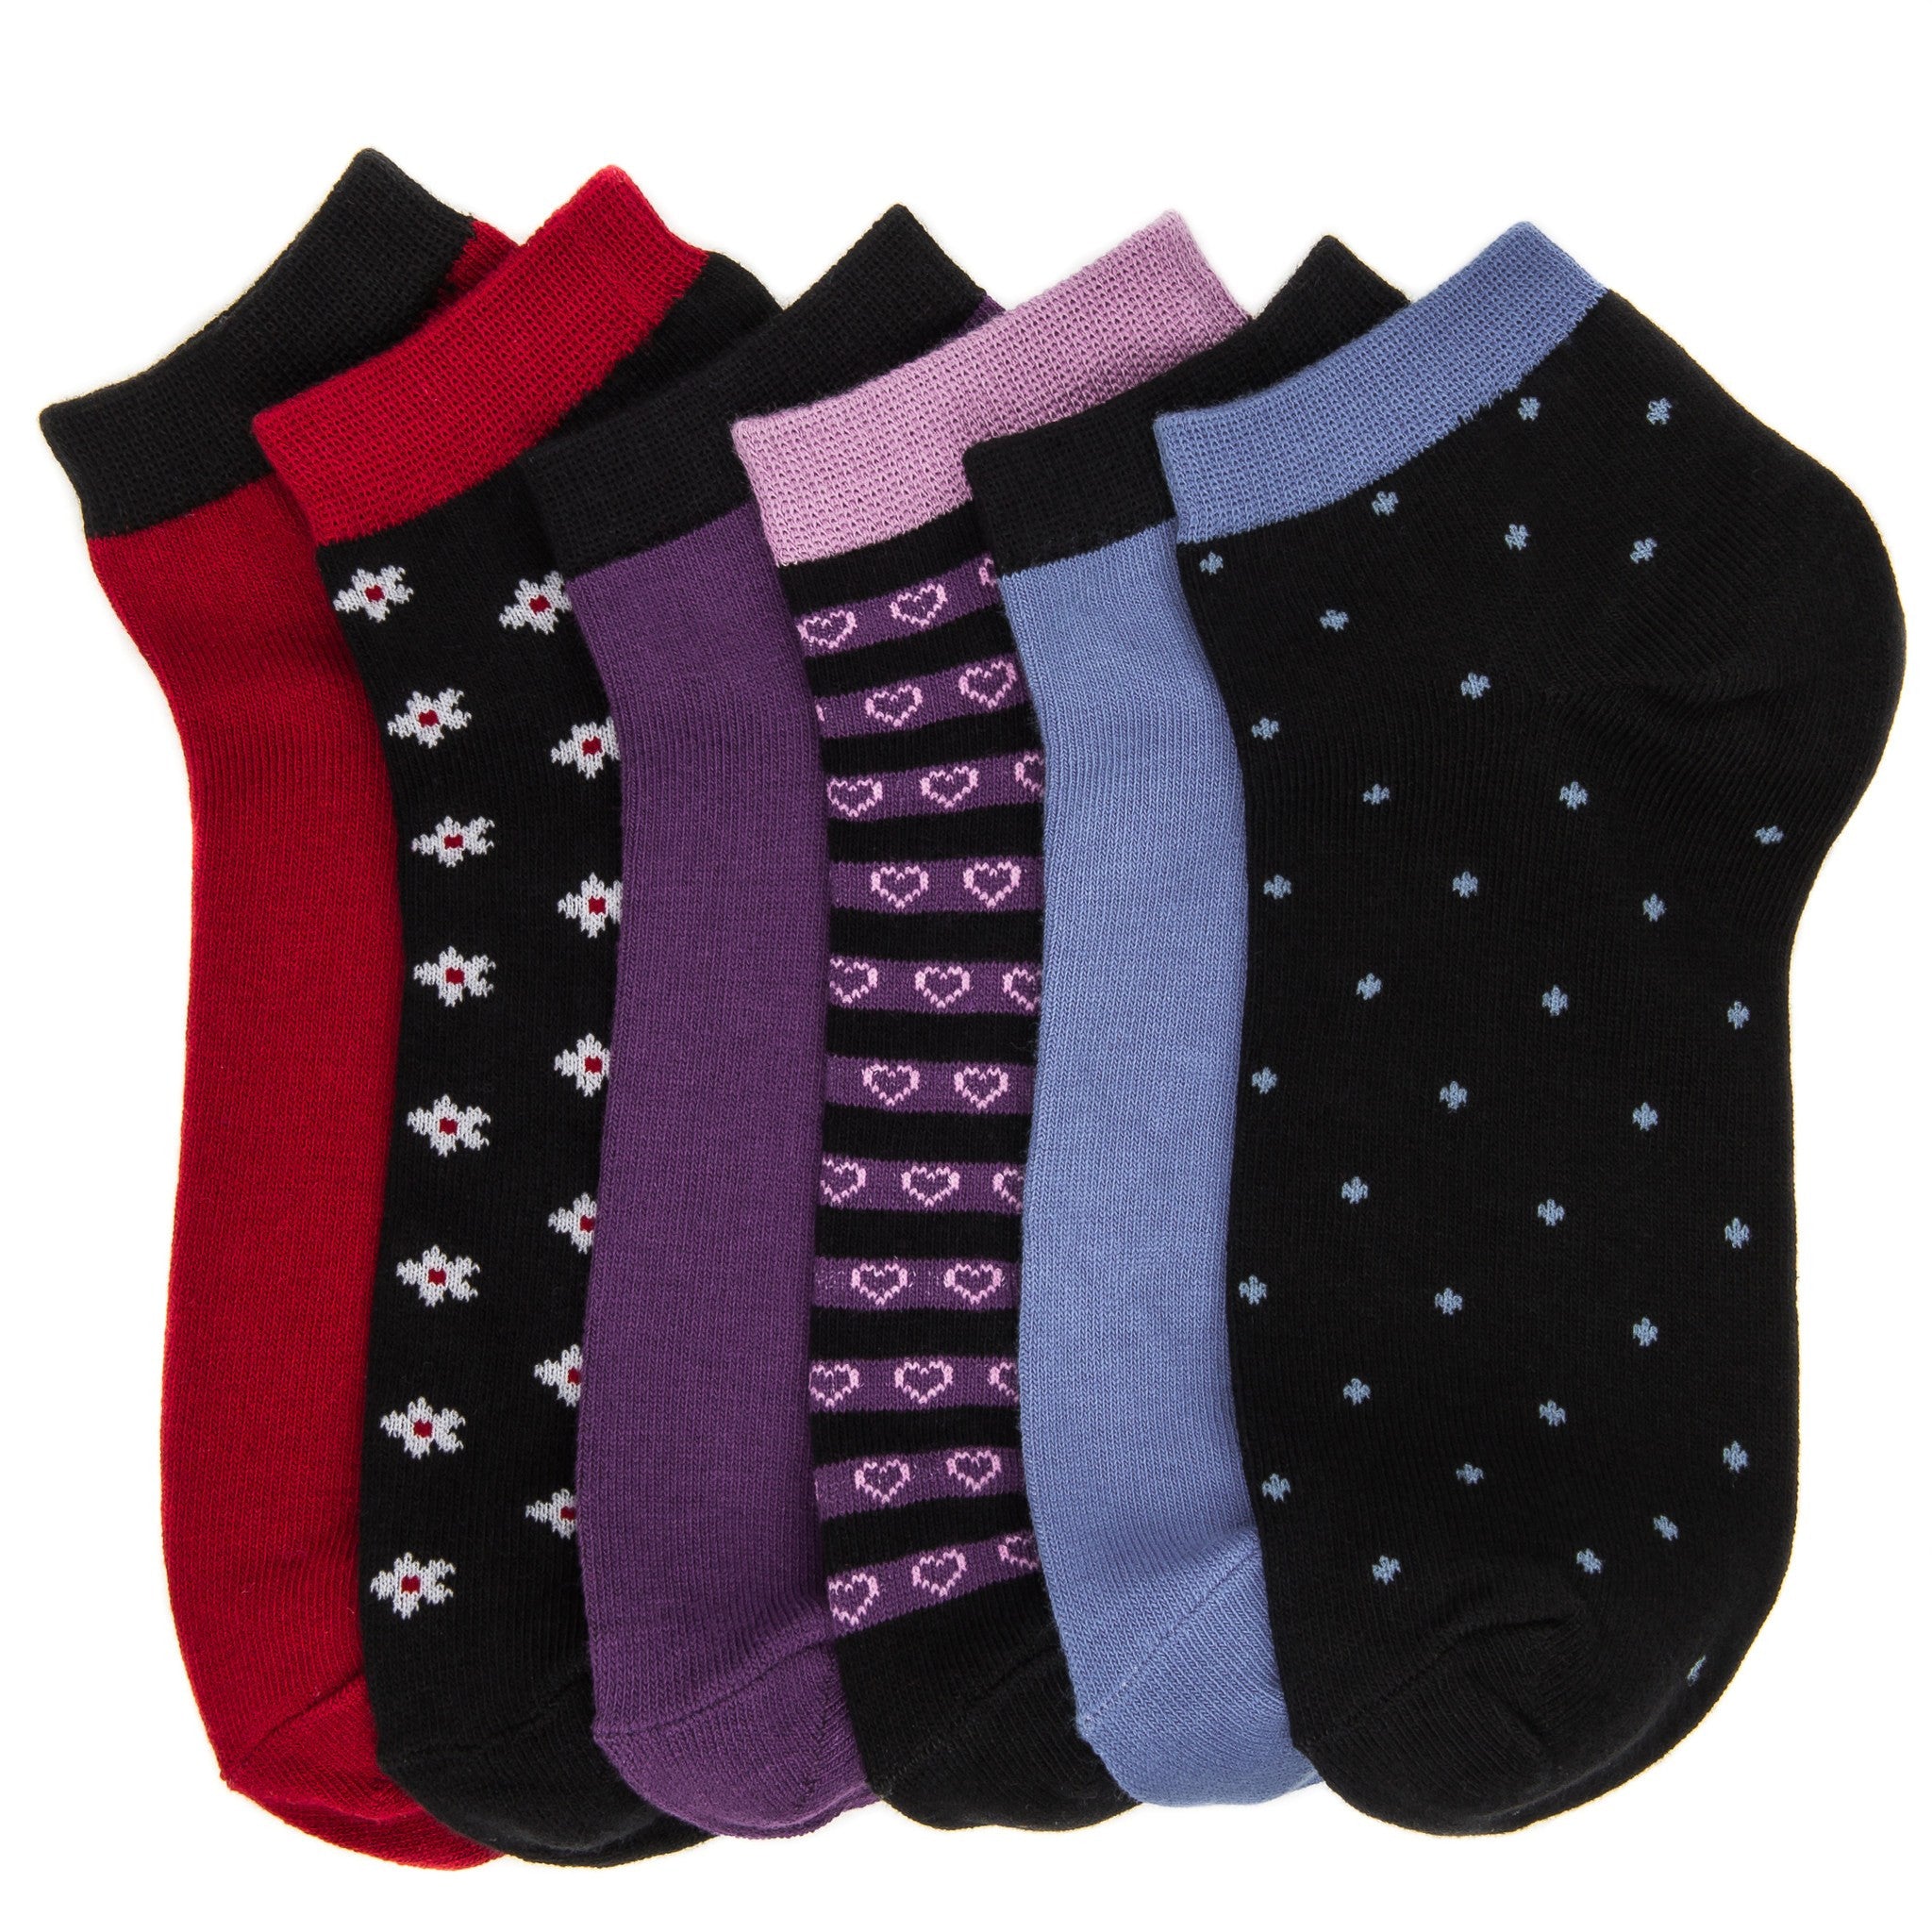 Women's Combed Cotton Premium Low Cut Socks